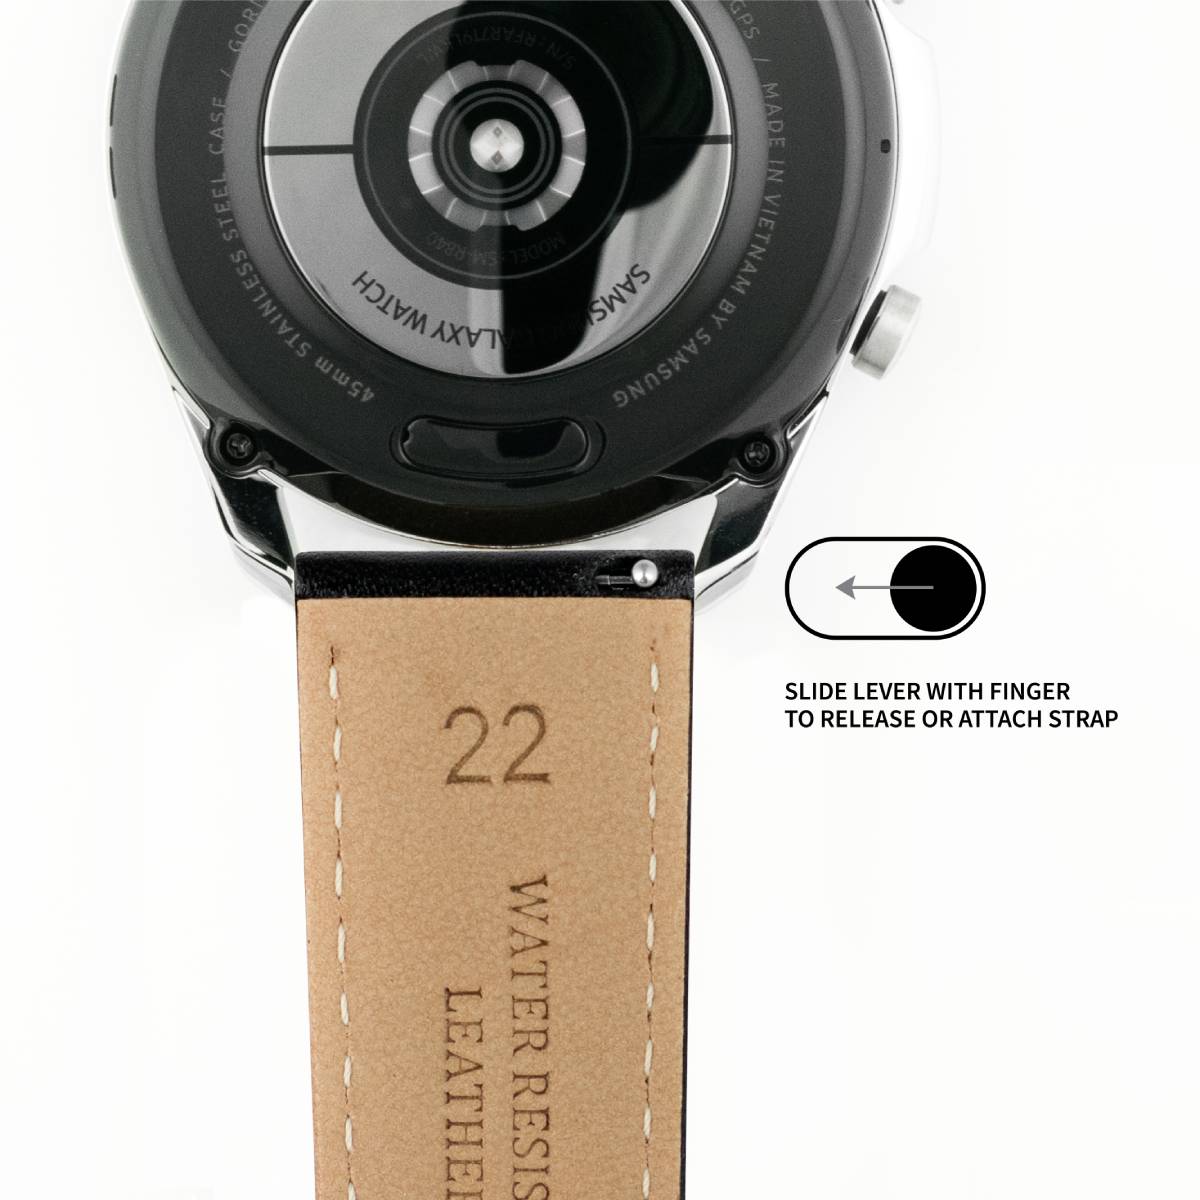 Moto 360 Gen2 White Pittards Performance Leather White Stitching Watch Band